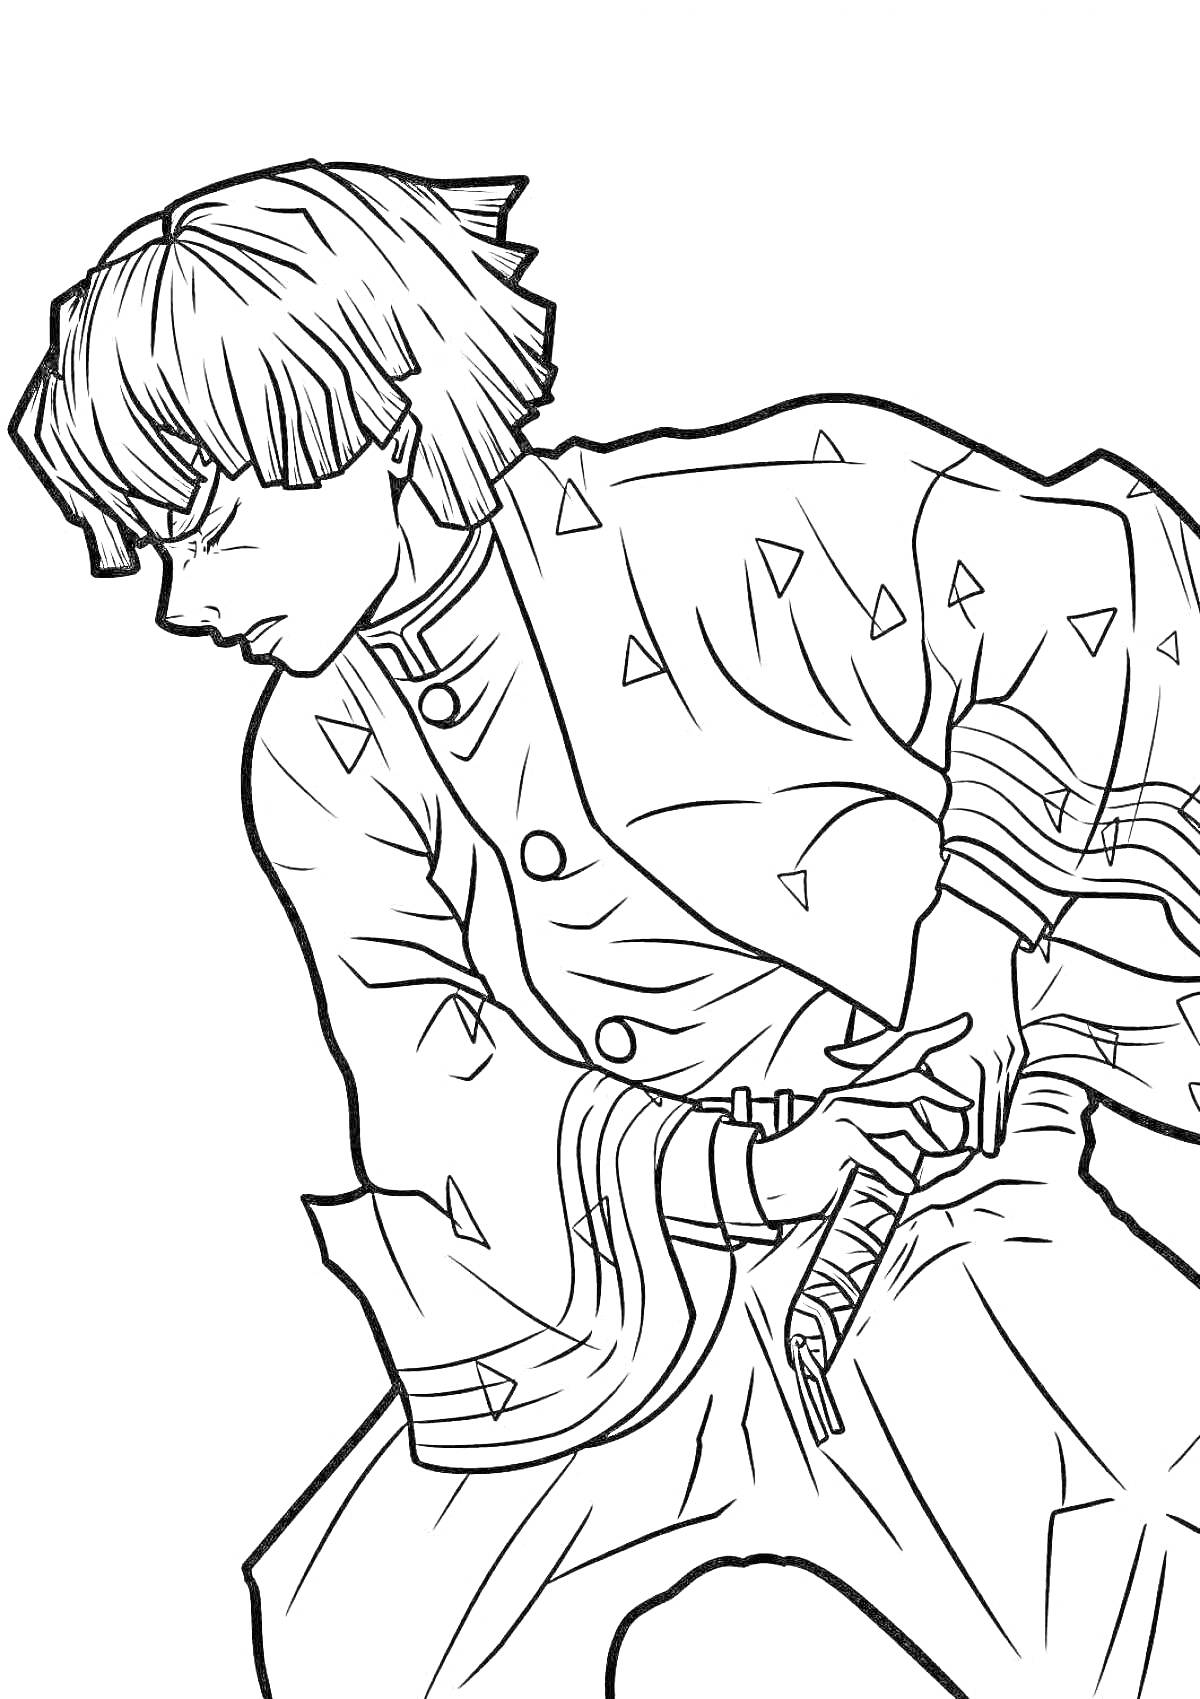 Раскраска Зеницу Агацума готовится к атаке с мечом в руке